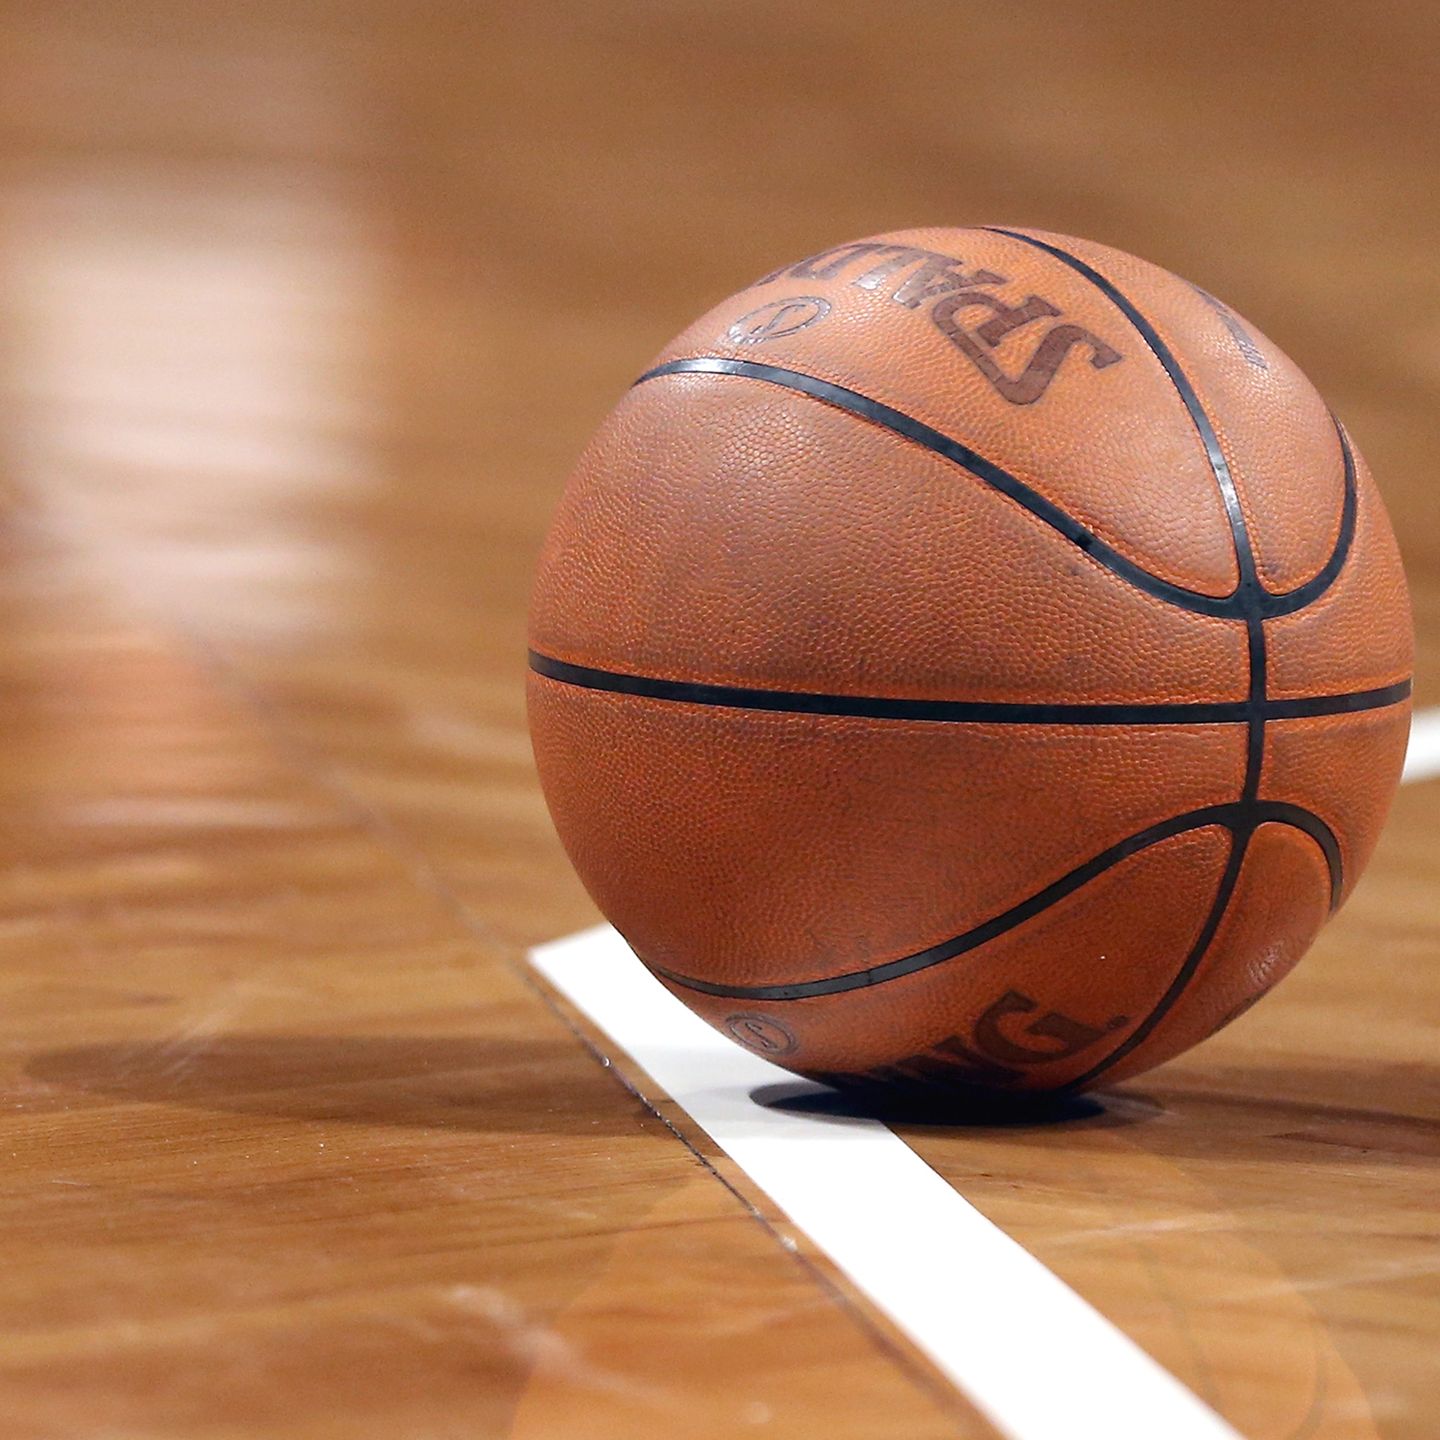 basketball on court floor